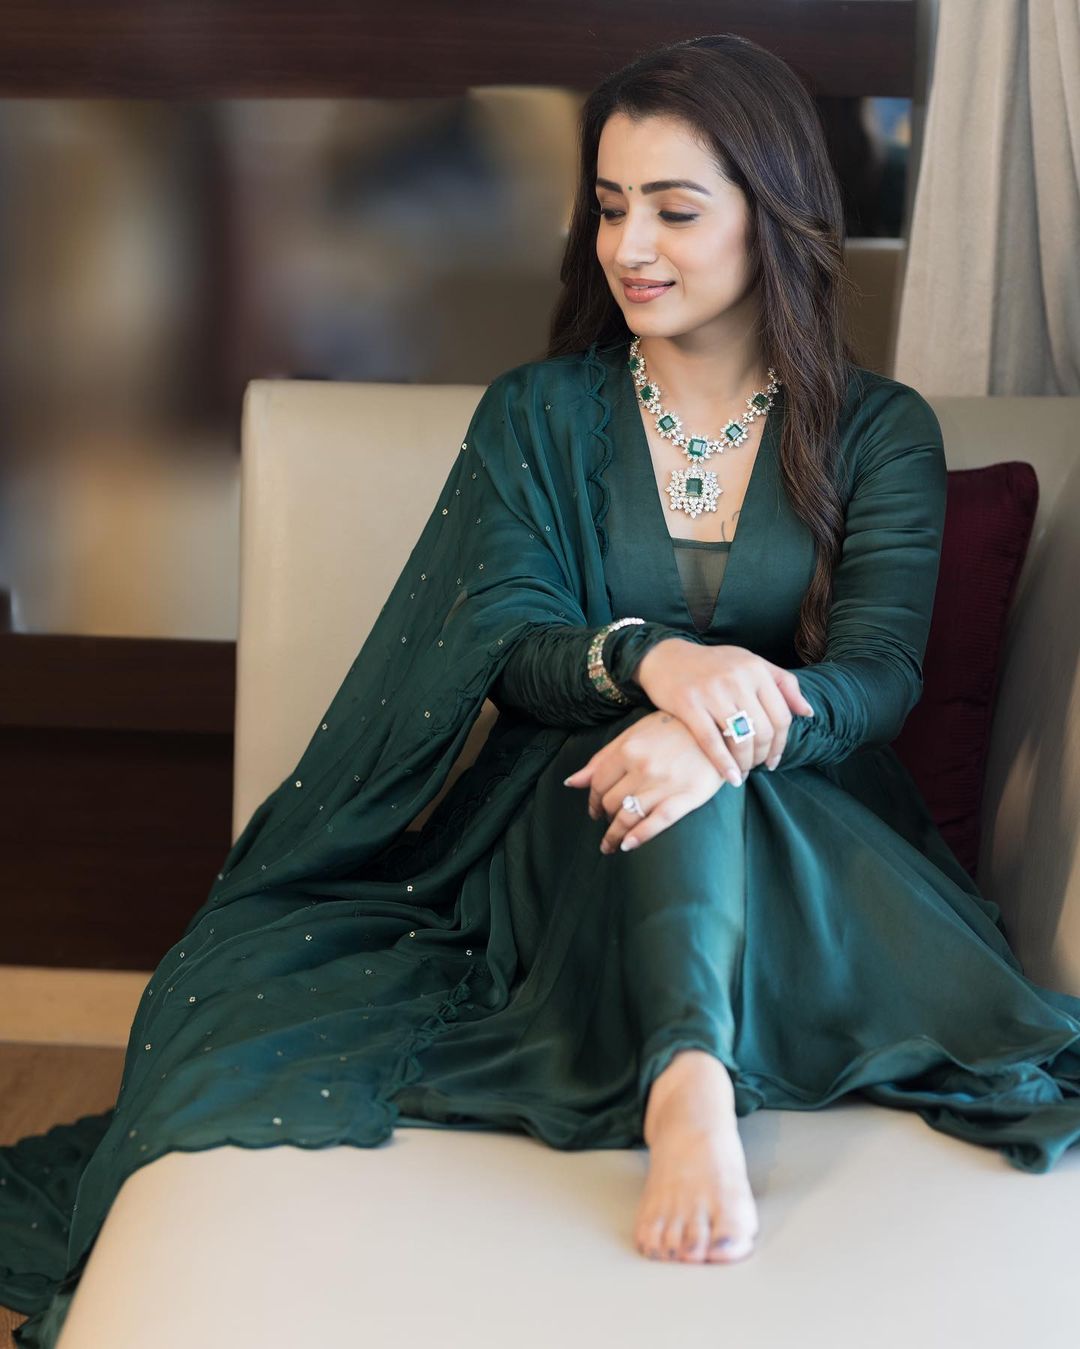 Trisha Krishnan Exudes Royalty In This Emerald Green Outfit; See Pics -  News18